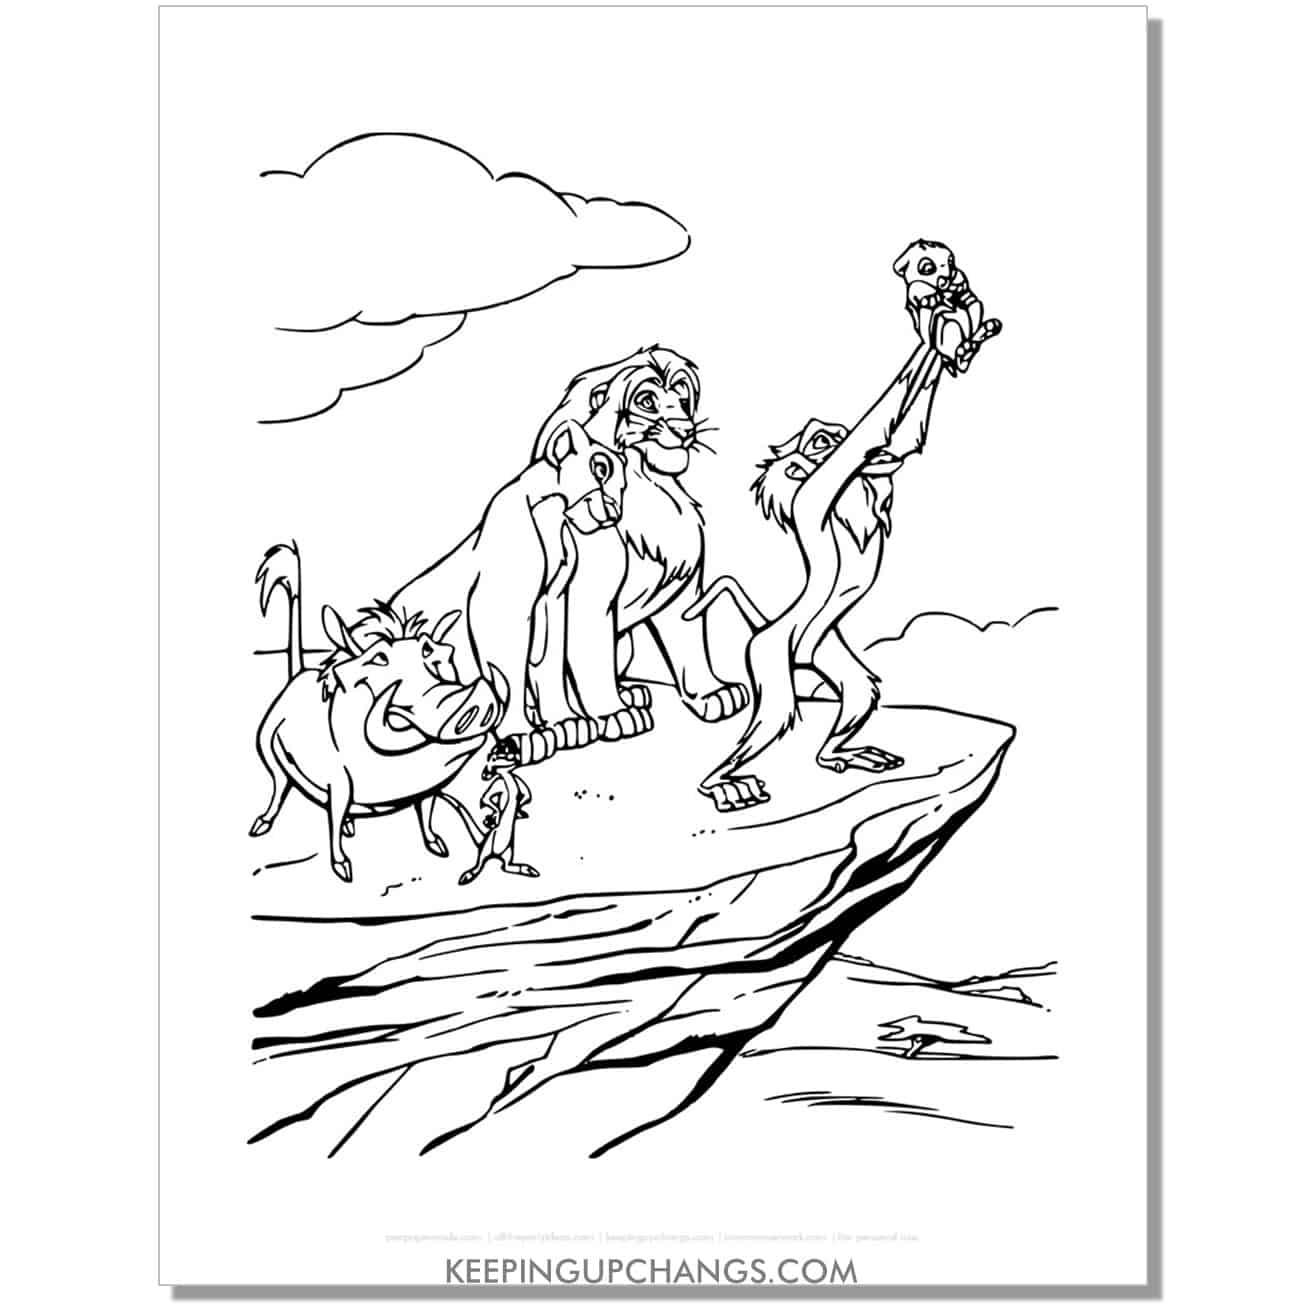 rakiki holds baby kiara for kingdom to see lion king coloring page, sheet.